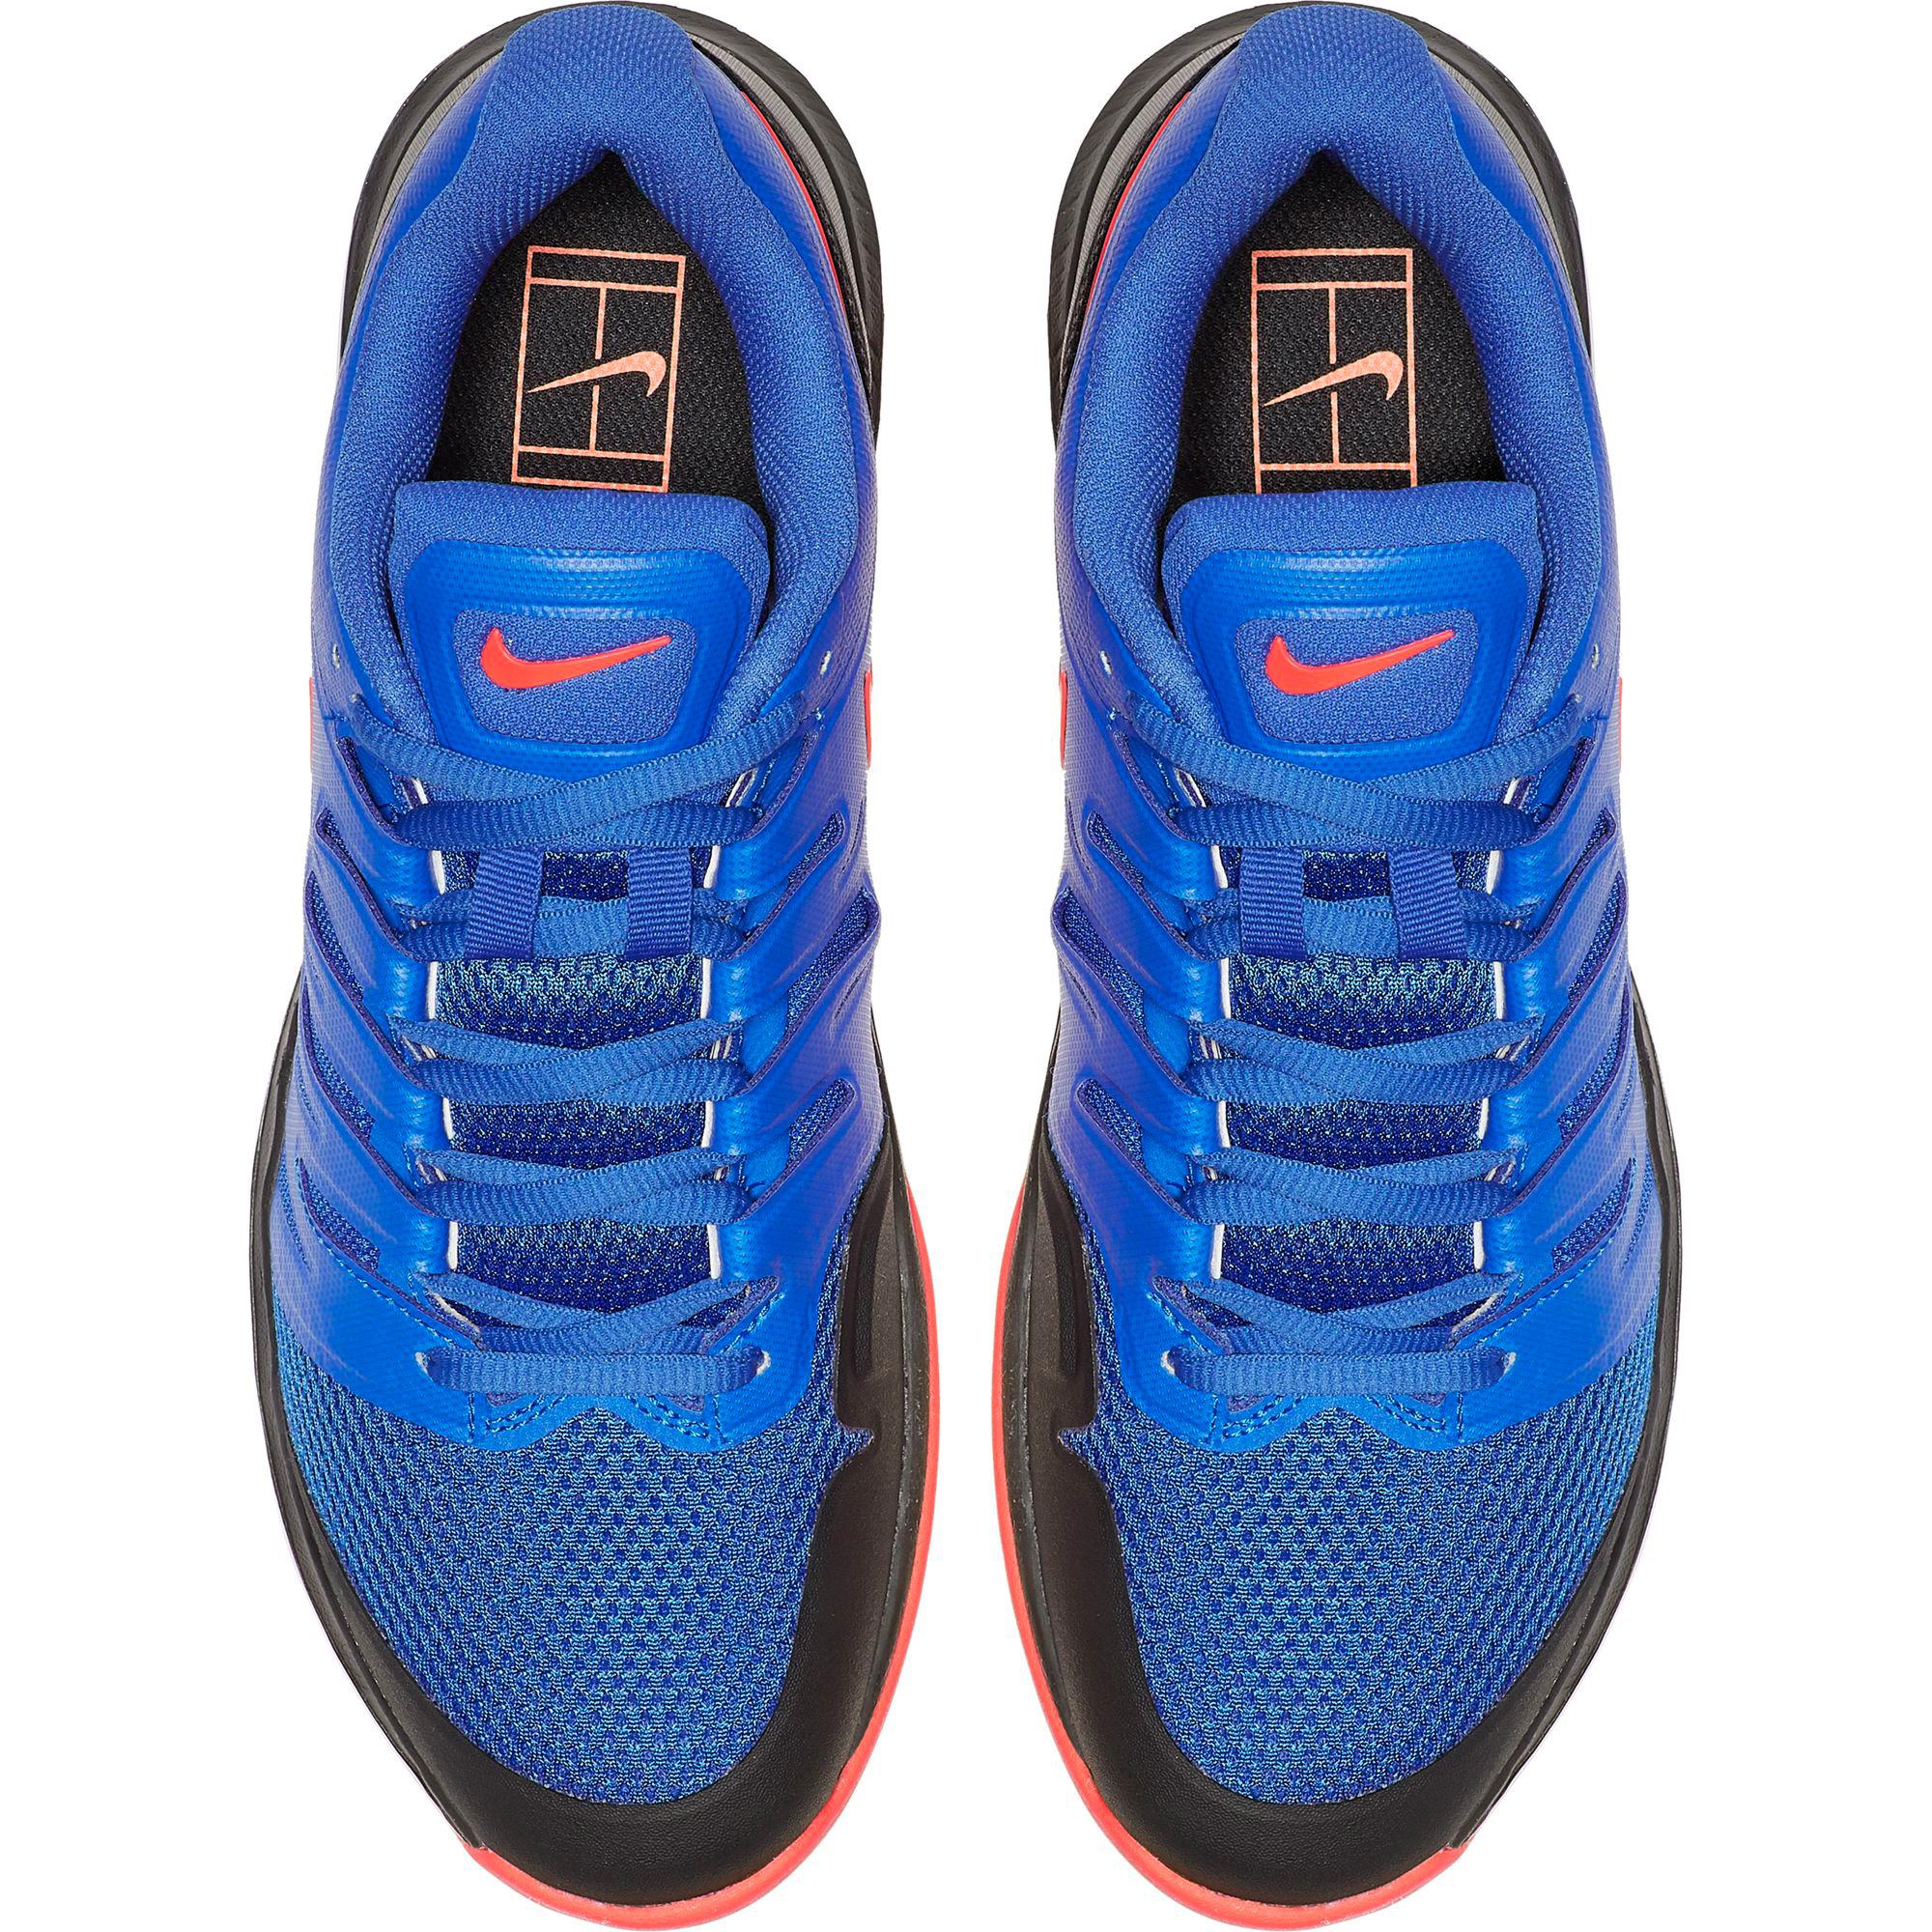 Nike Mens Air Zoom Prestige Carpet Tennis Shoes - Racer ...